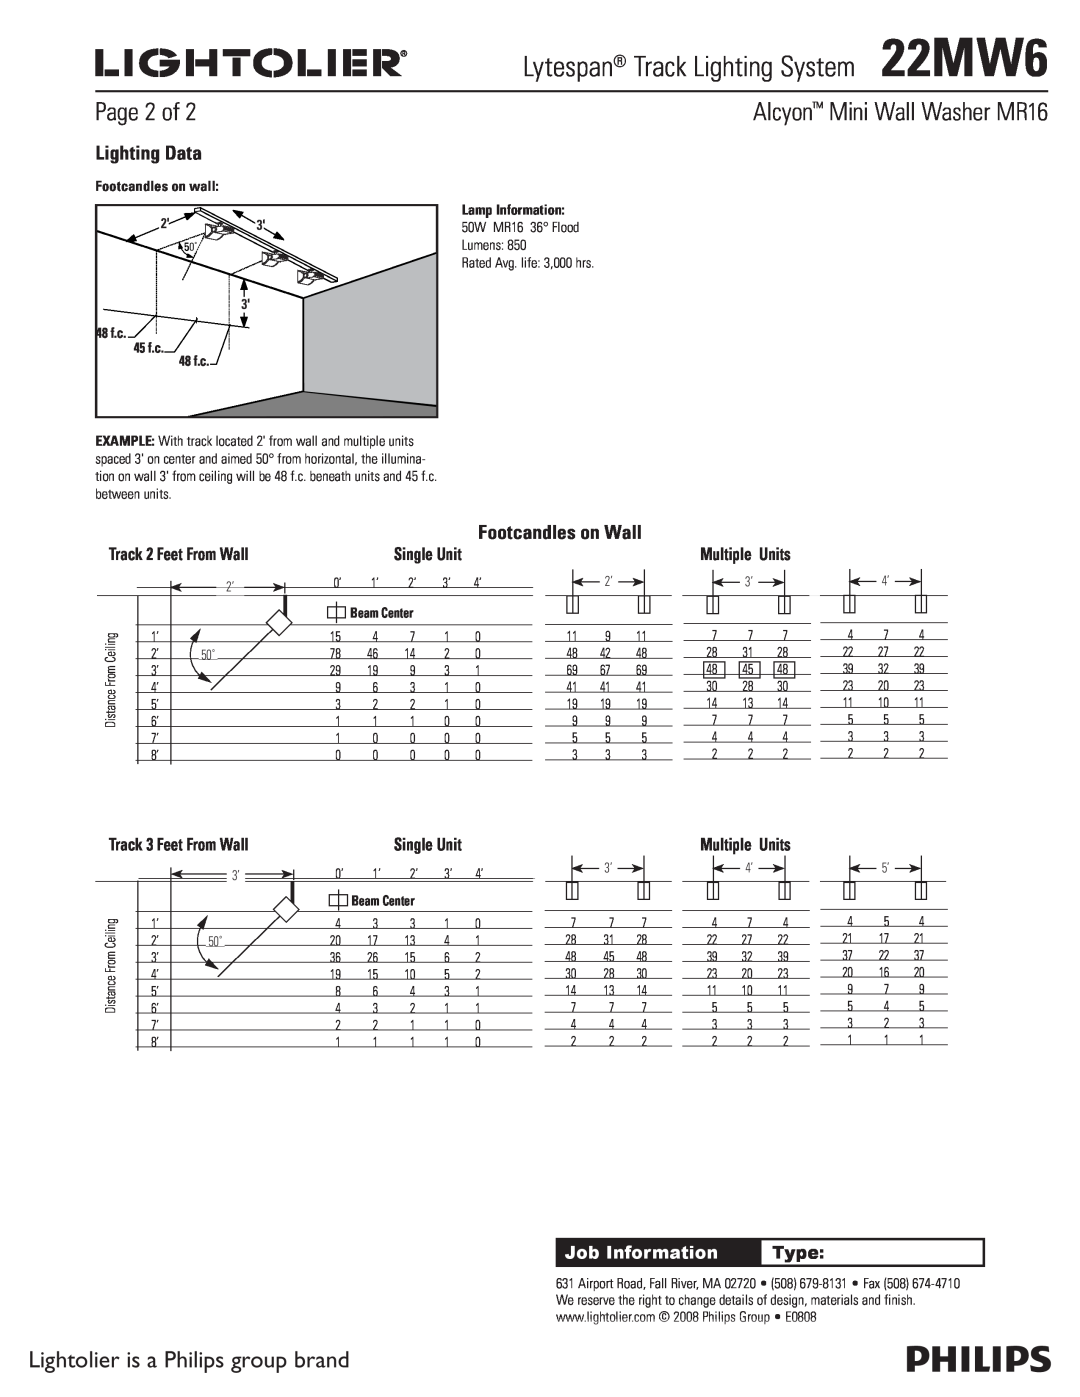 Lightolier Page 2 of, Lytespan Track Lighting System22MW6, Lighting Data, Footcandles on Wall, Multiple, Units, Type 